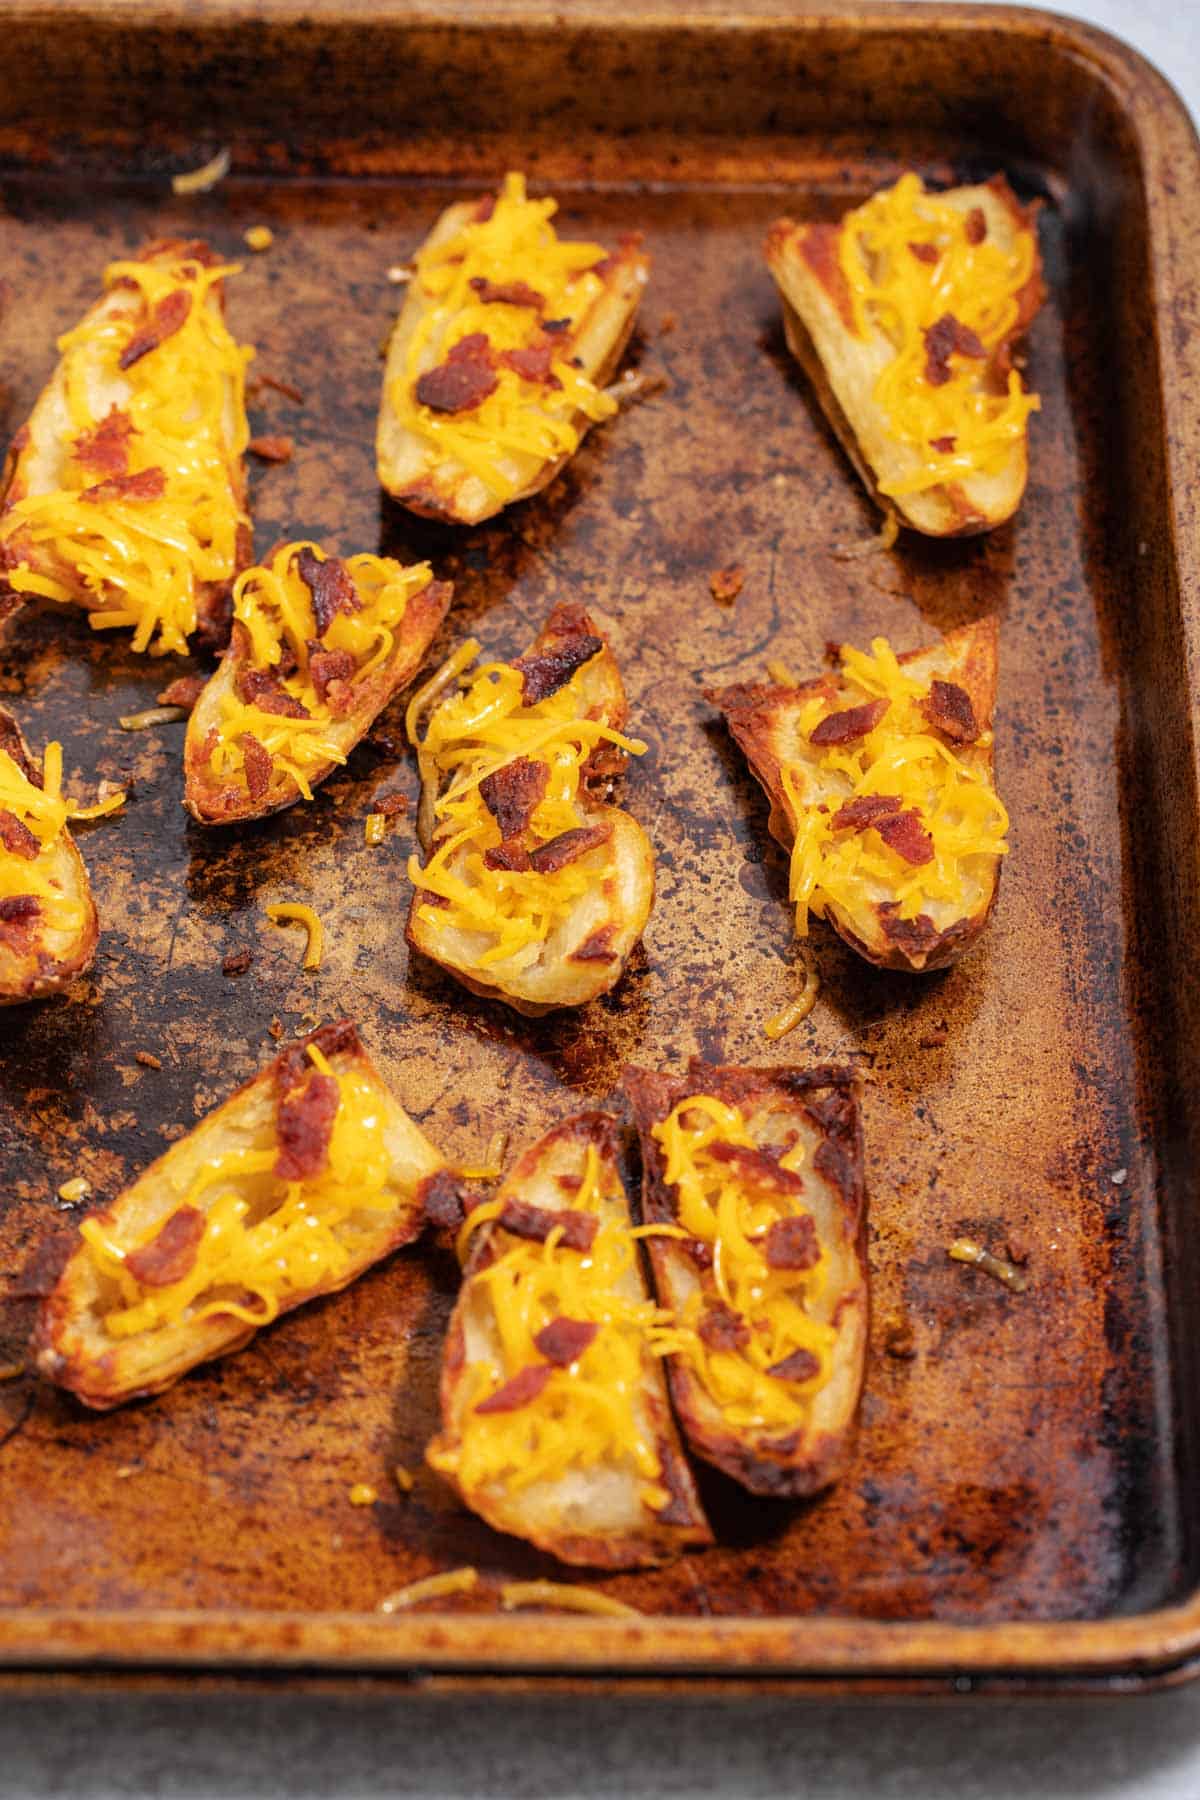 Baking tray of TGIF potato skins recipe going into the oven.